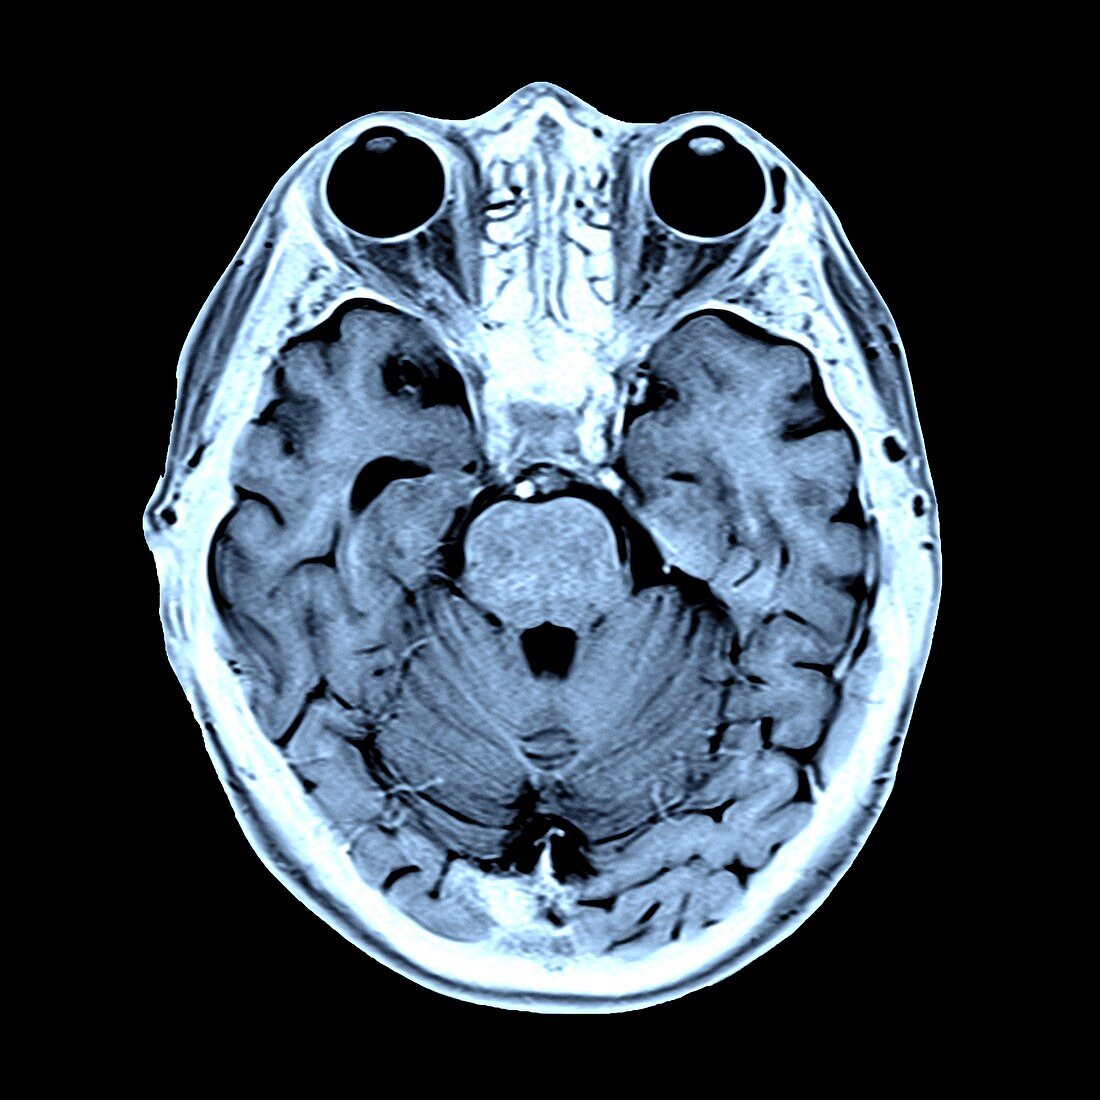 Coloured MRI scan of the human head